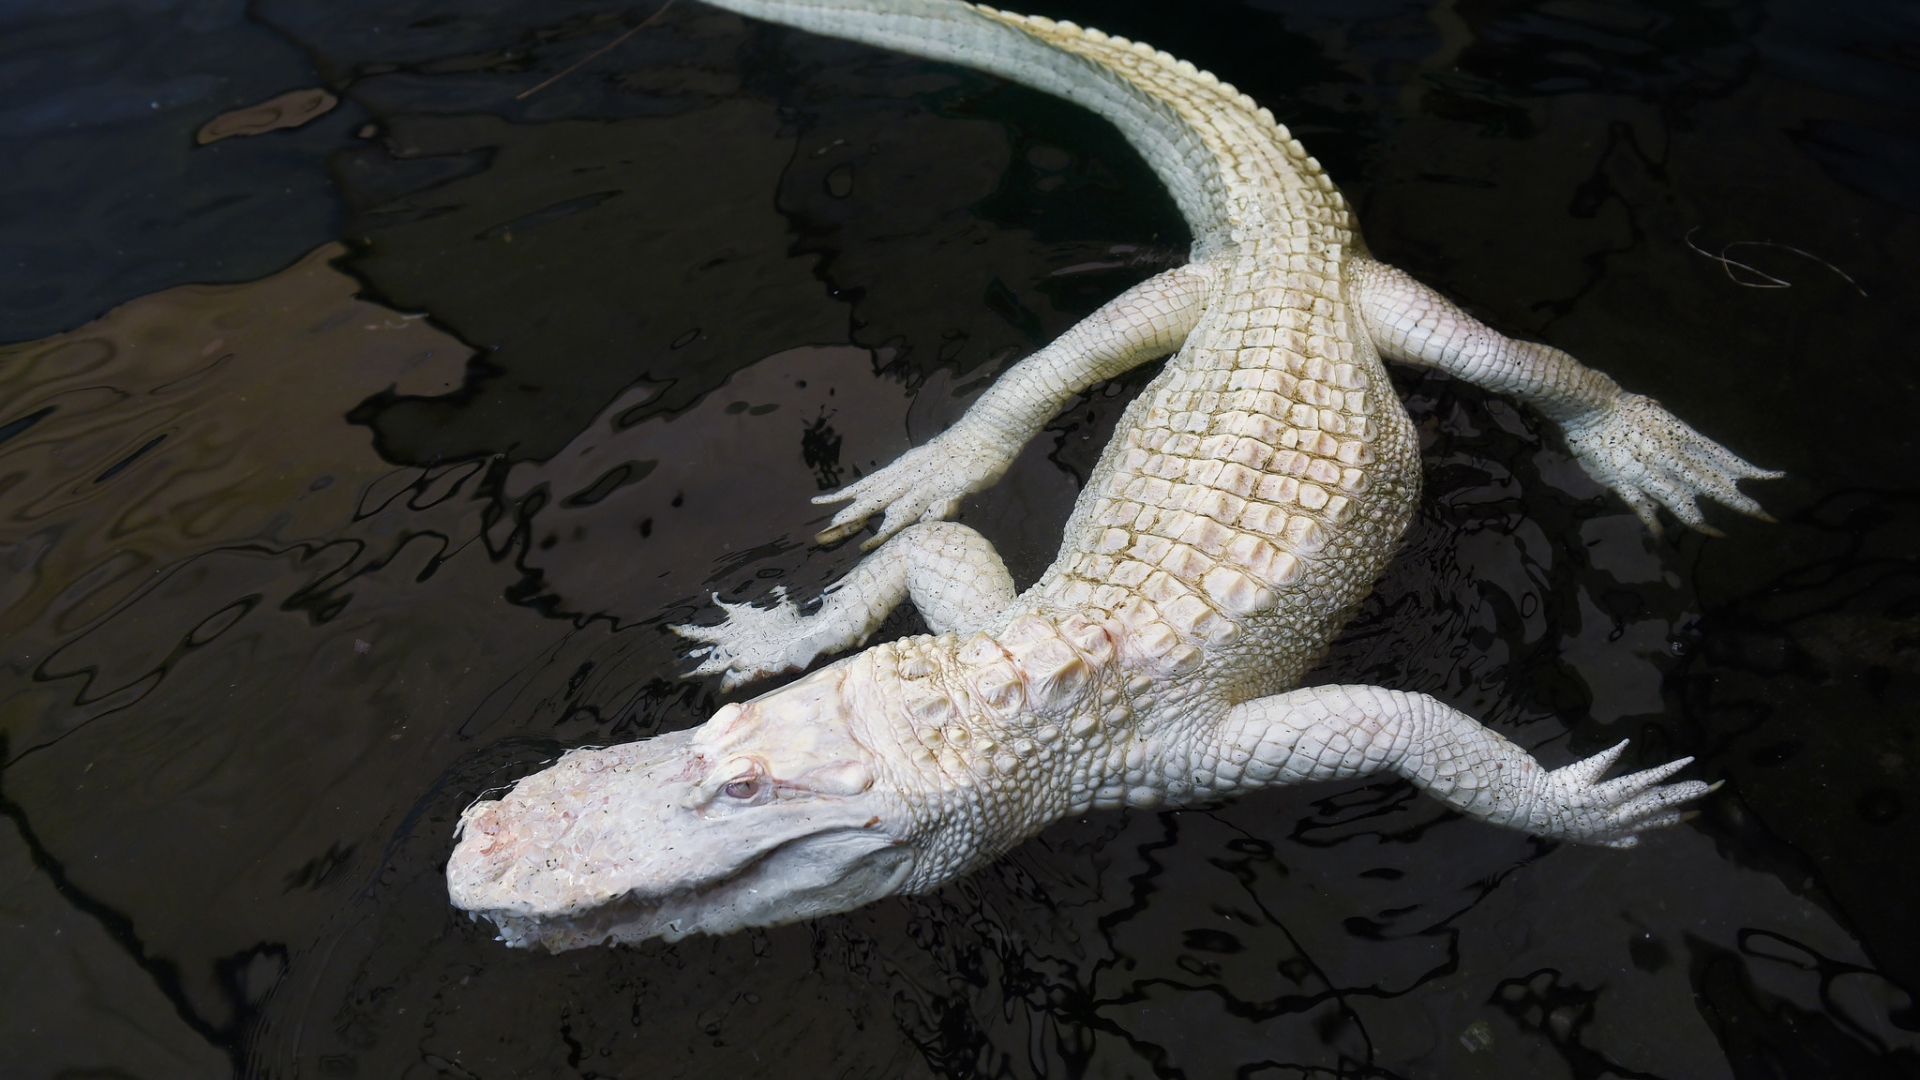 albino alligator stuffed animal